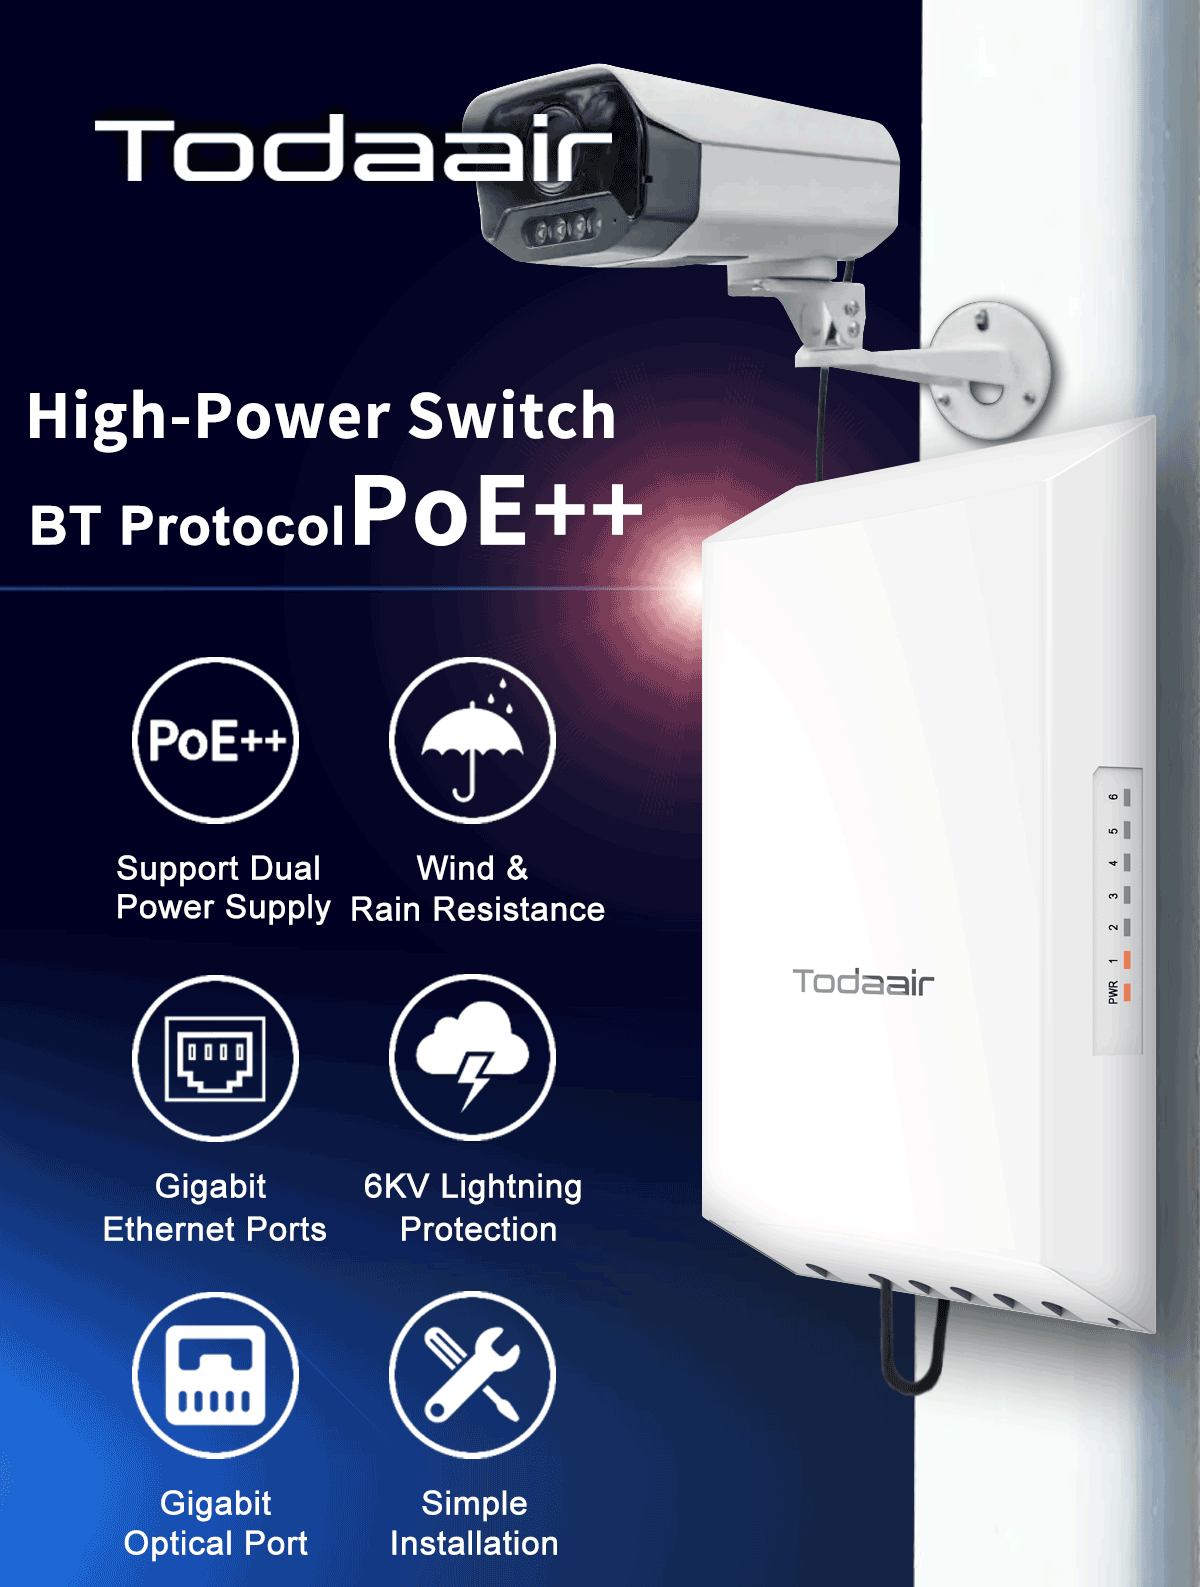 Todaair high power network Switch